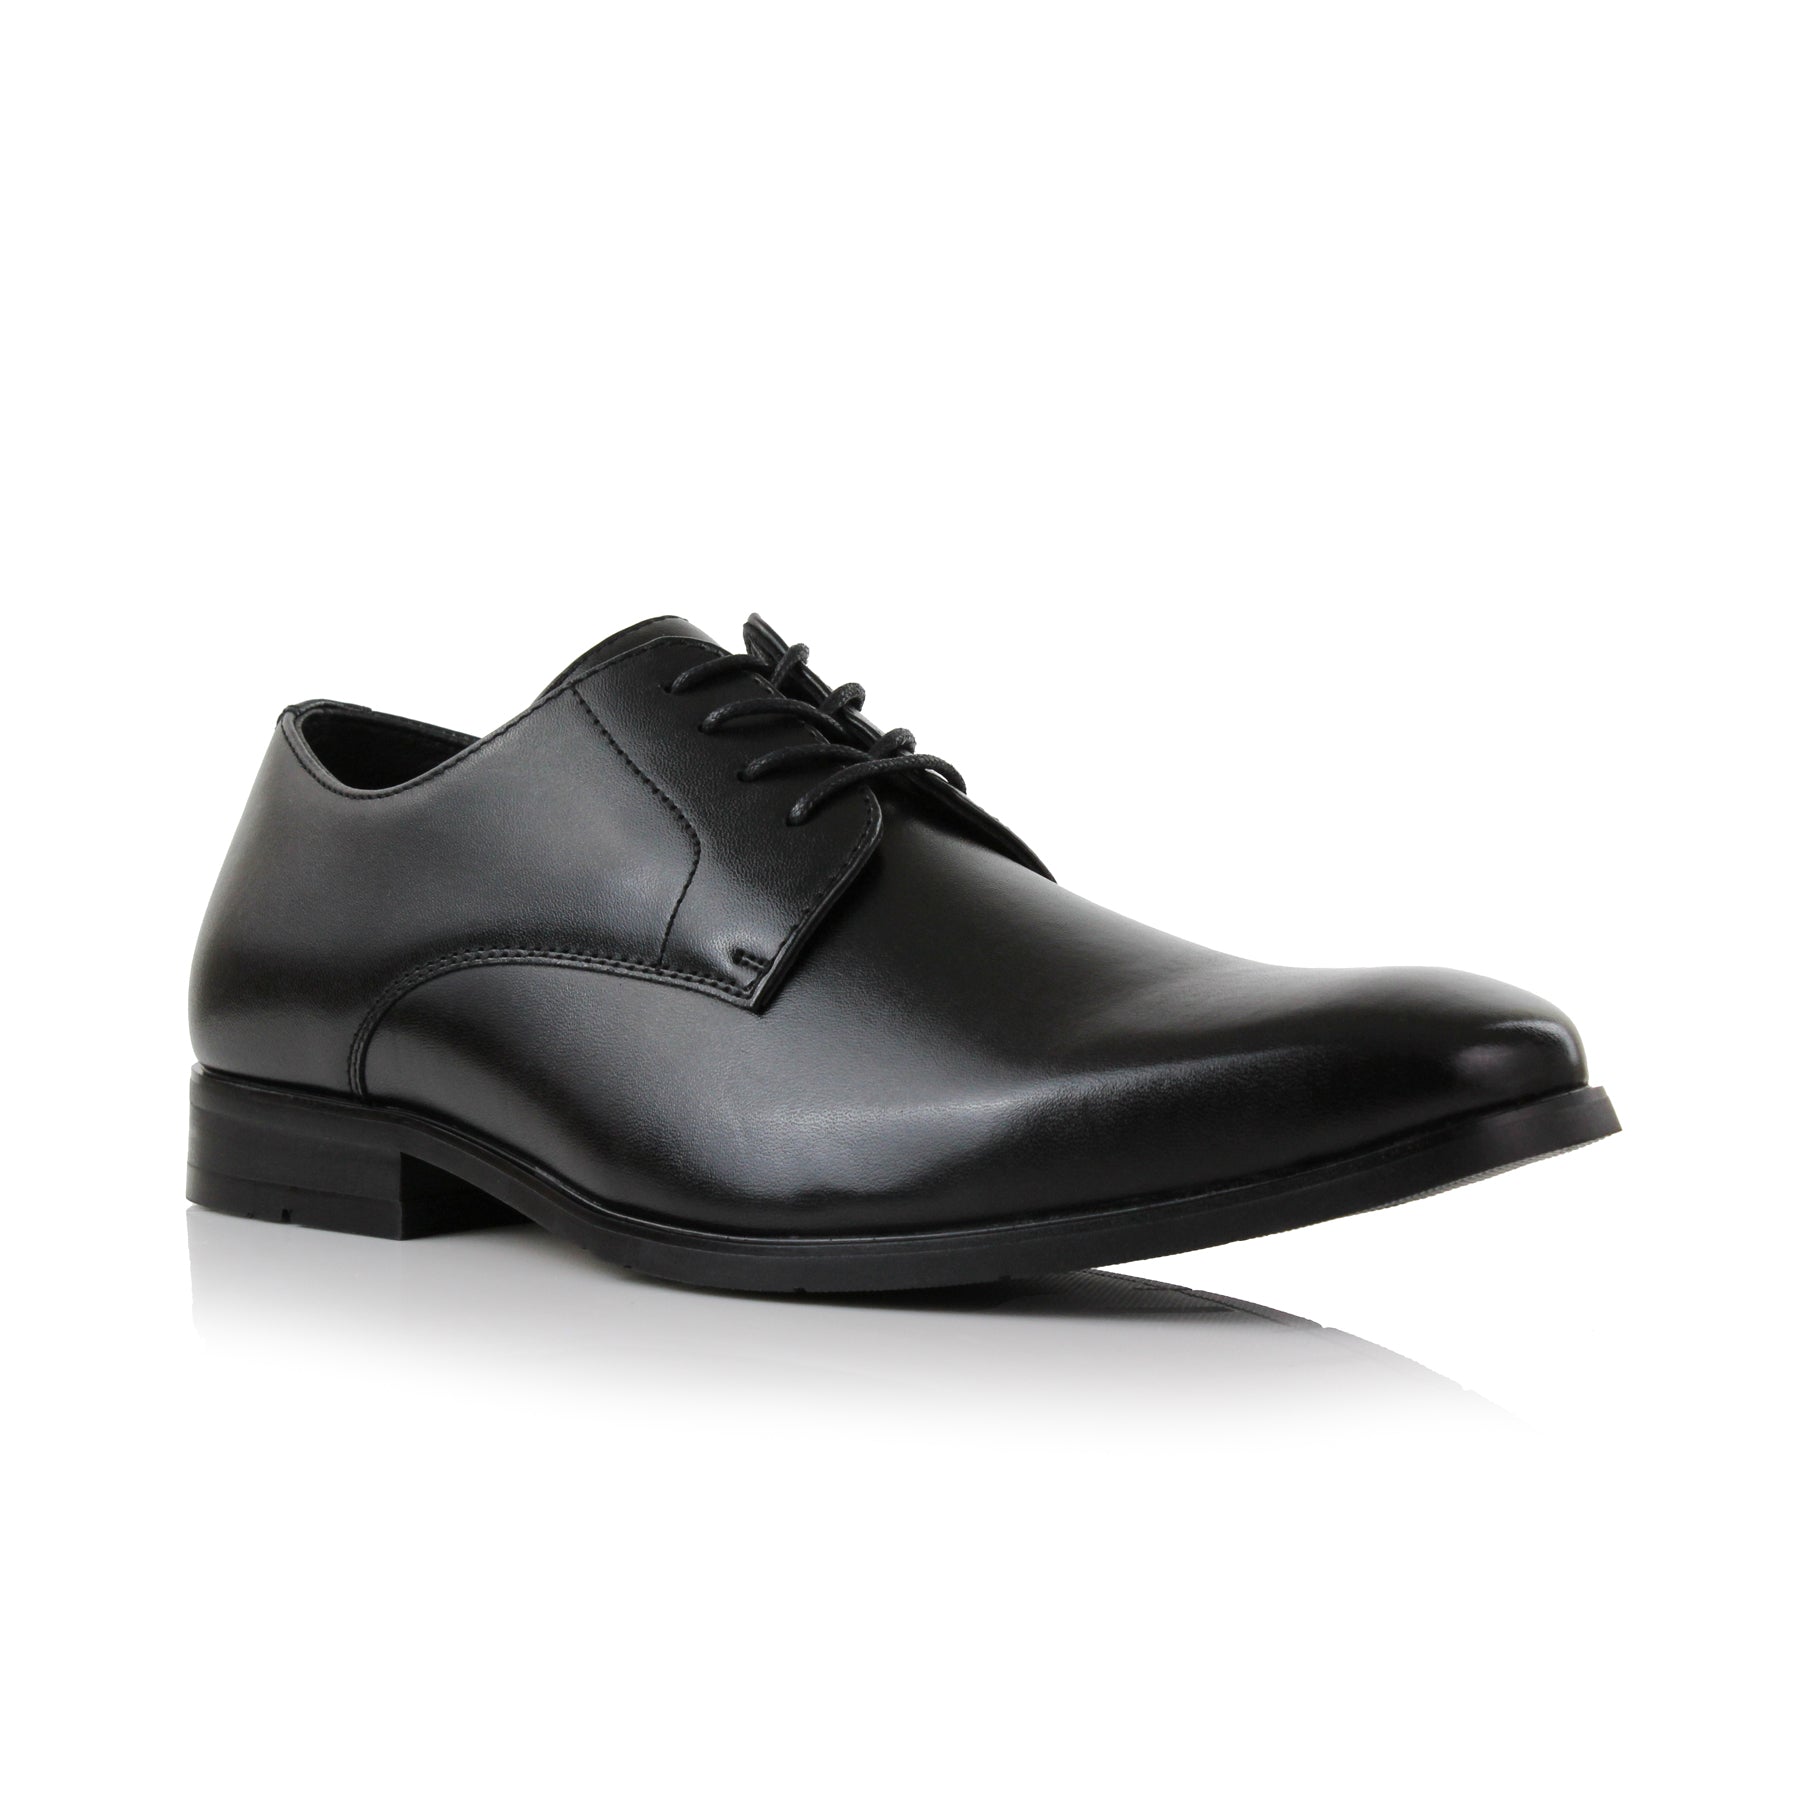 Plain Toe Derby Shoes | Alvin by Ferro Aldo | Conal Footwear | Main Angle View